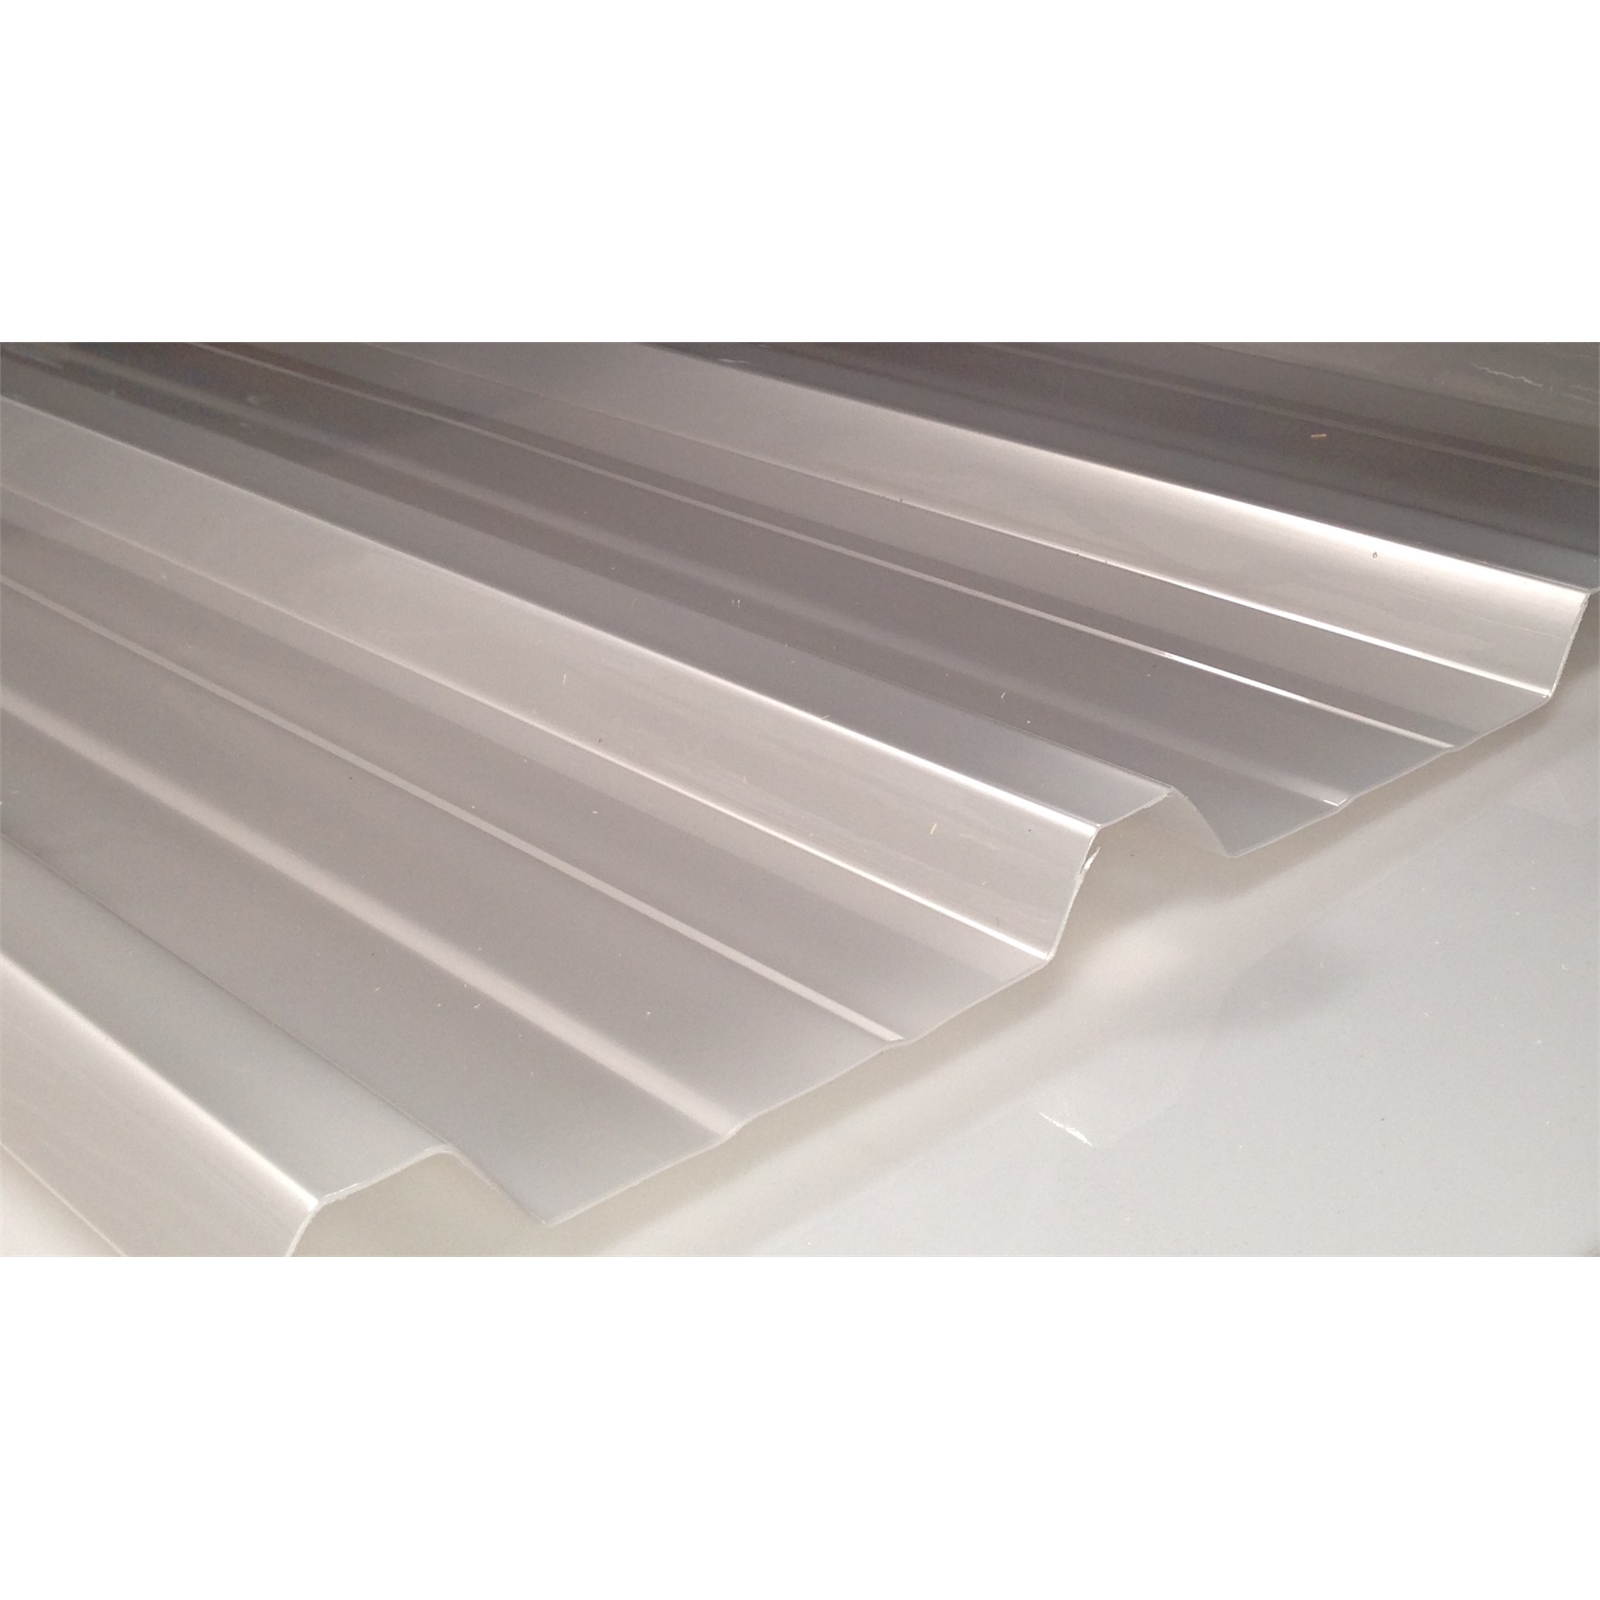 Suntuf Trimdek 1.0 x 3.6m Metallic Ice Polycarbonate Roofing